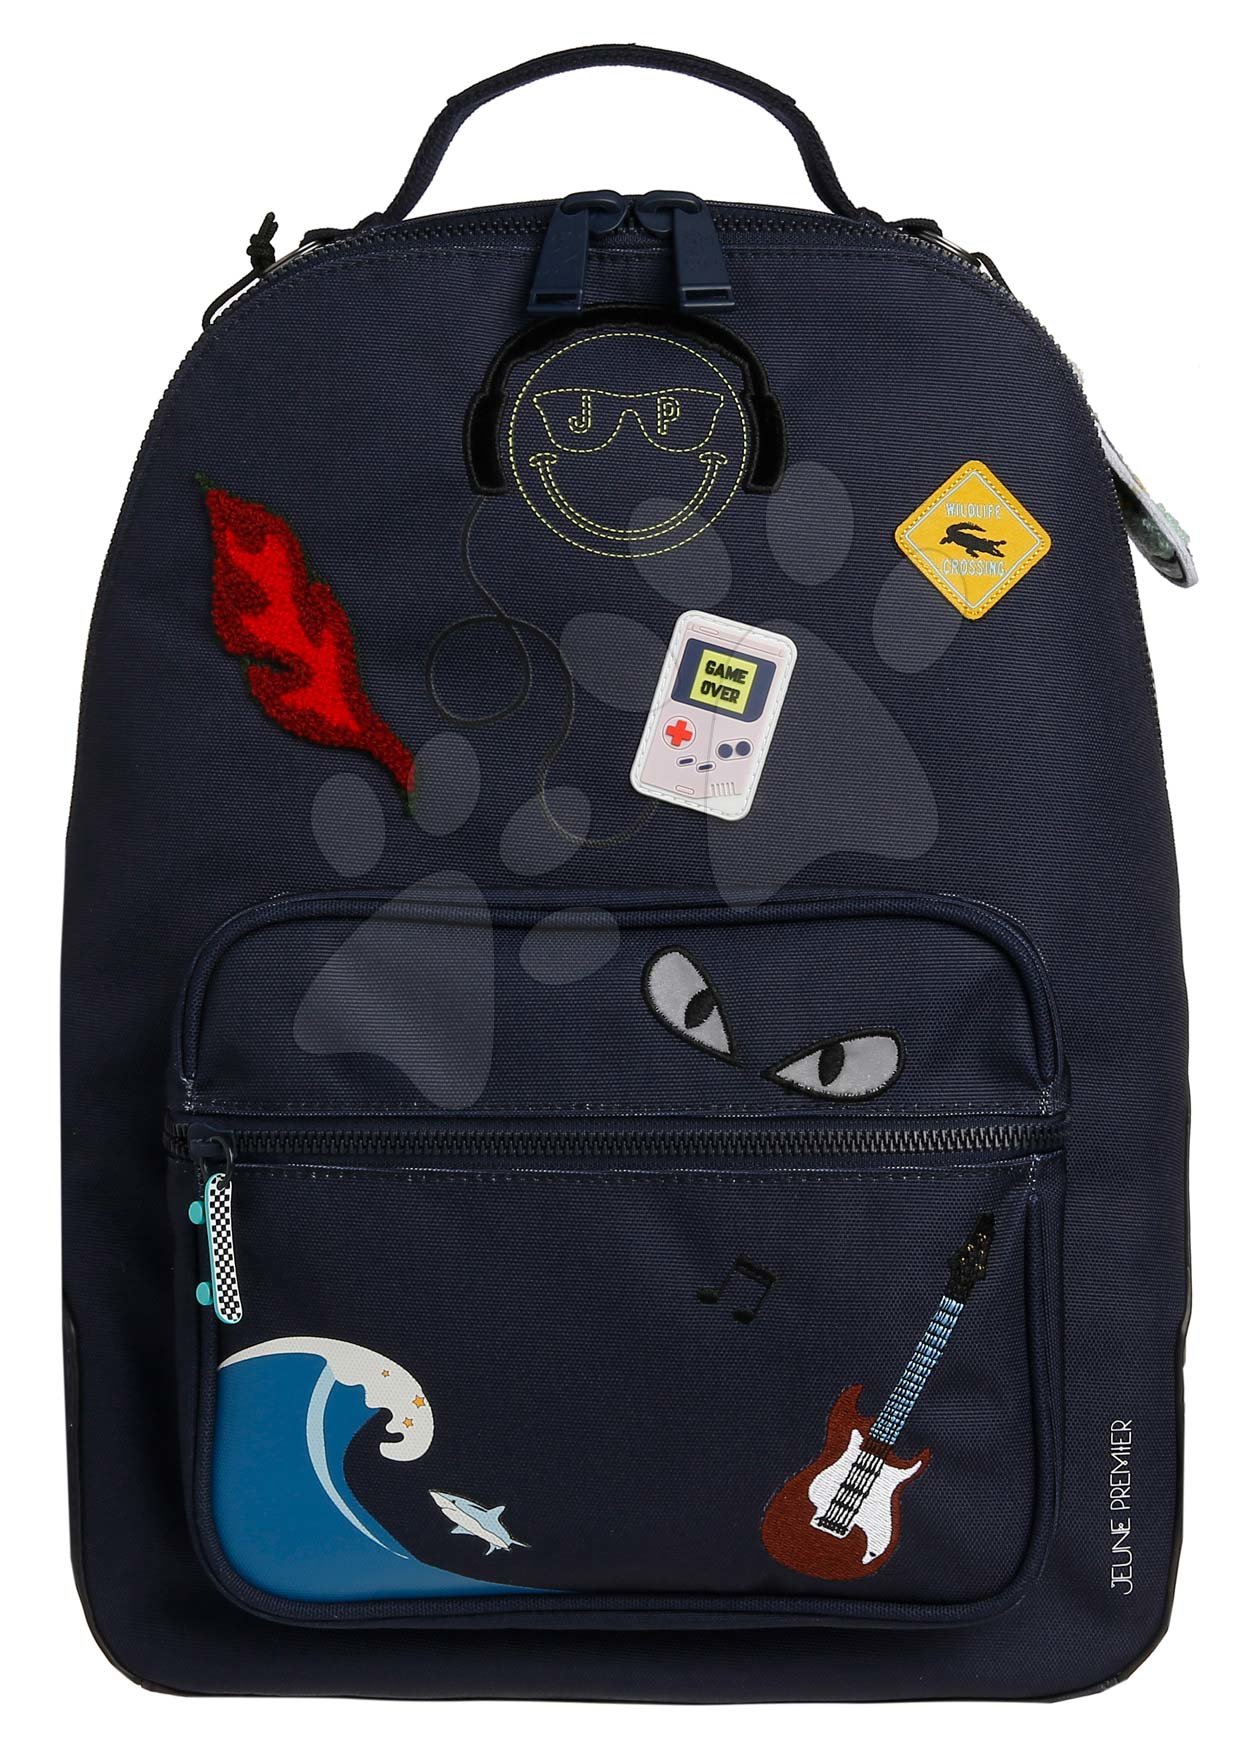 Školské tašky a batohy - Školská taška batoh Backpack Bobbie Mr. Gadget Jeune Premier ergonomický luxusné prevedenie 41*30 cm